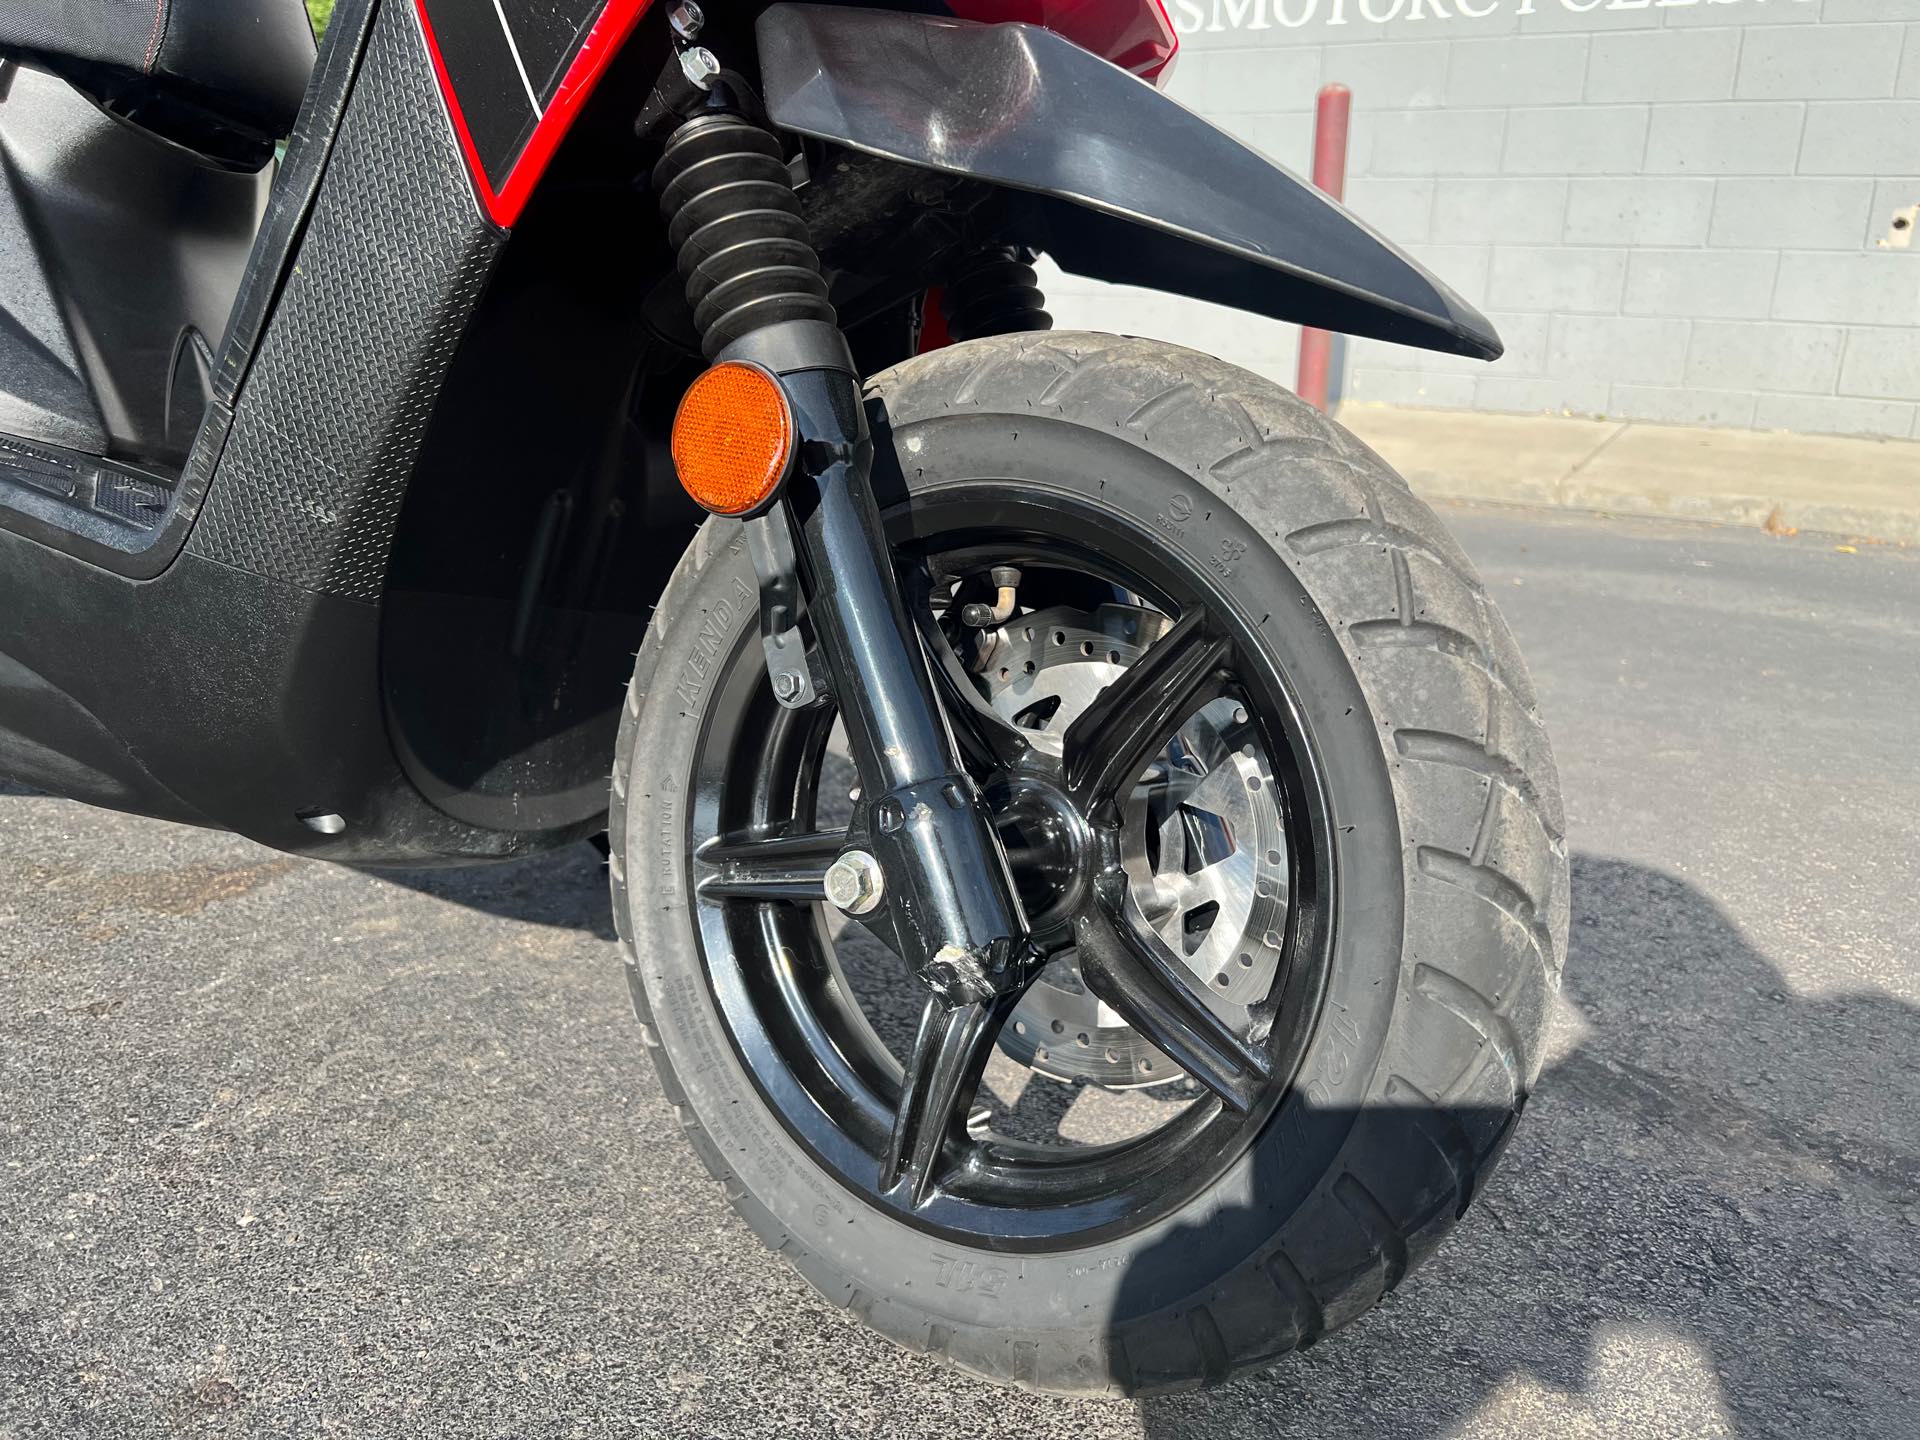 2018 Yamaha Zuma 125 at Aces Motorcycles - Fort Collins